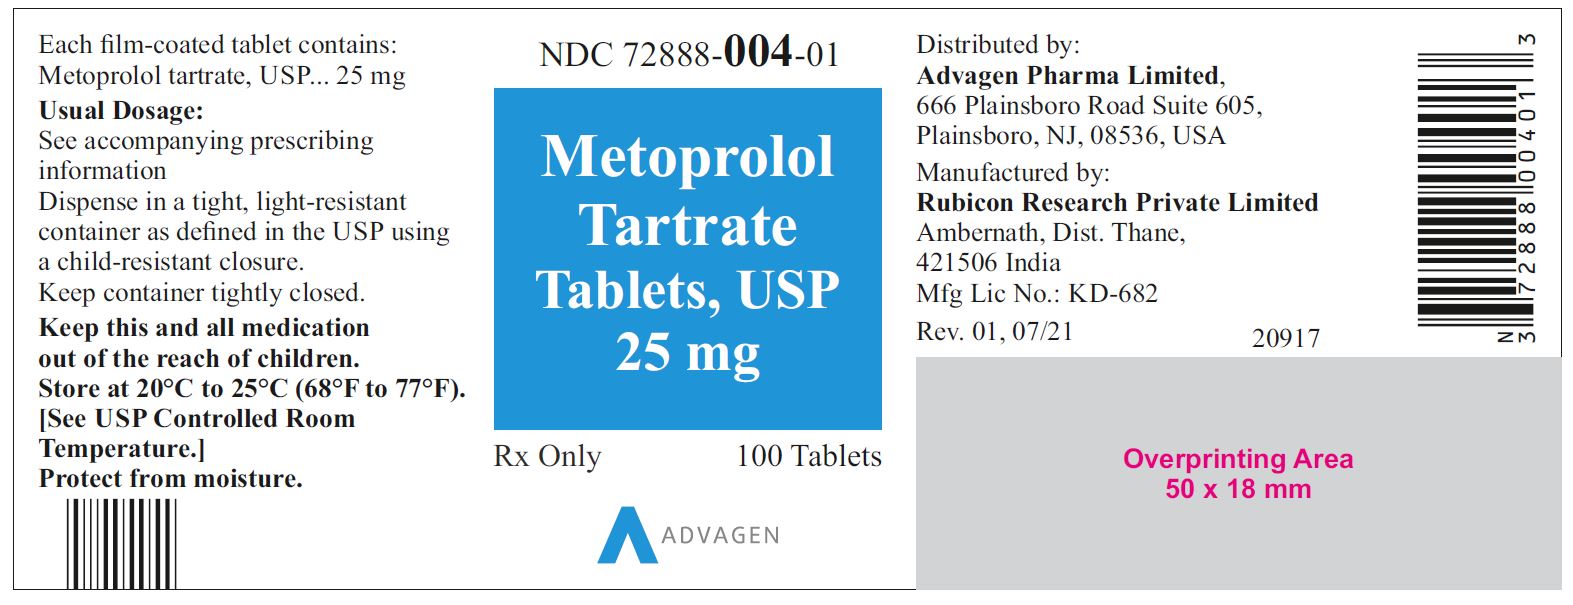 NDC: <a href=/NDC/72888-004-01>72888-004-01</a> - Metoprolol Tartrate Tablets, USP 25 mg - 100 Tablets